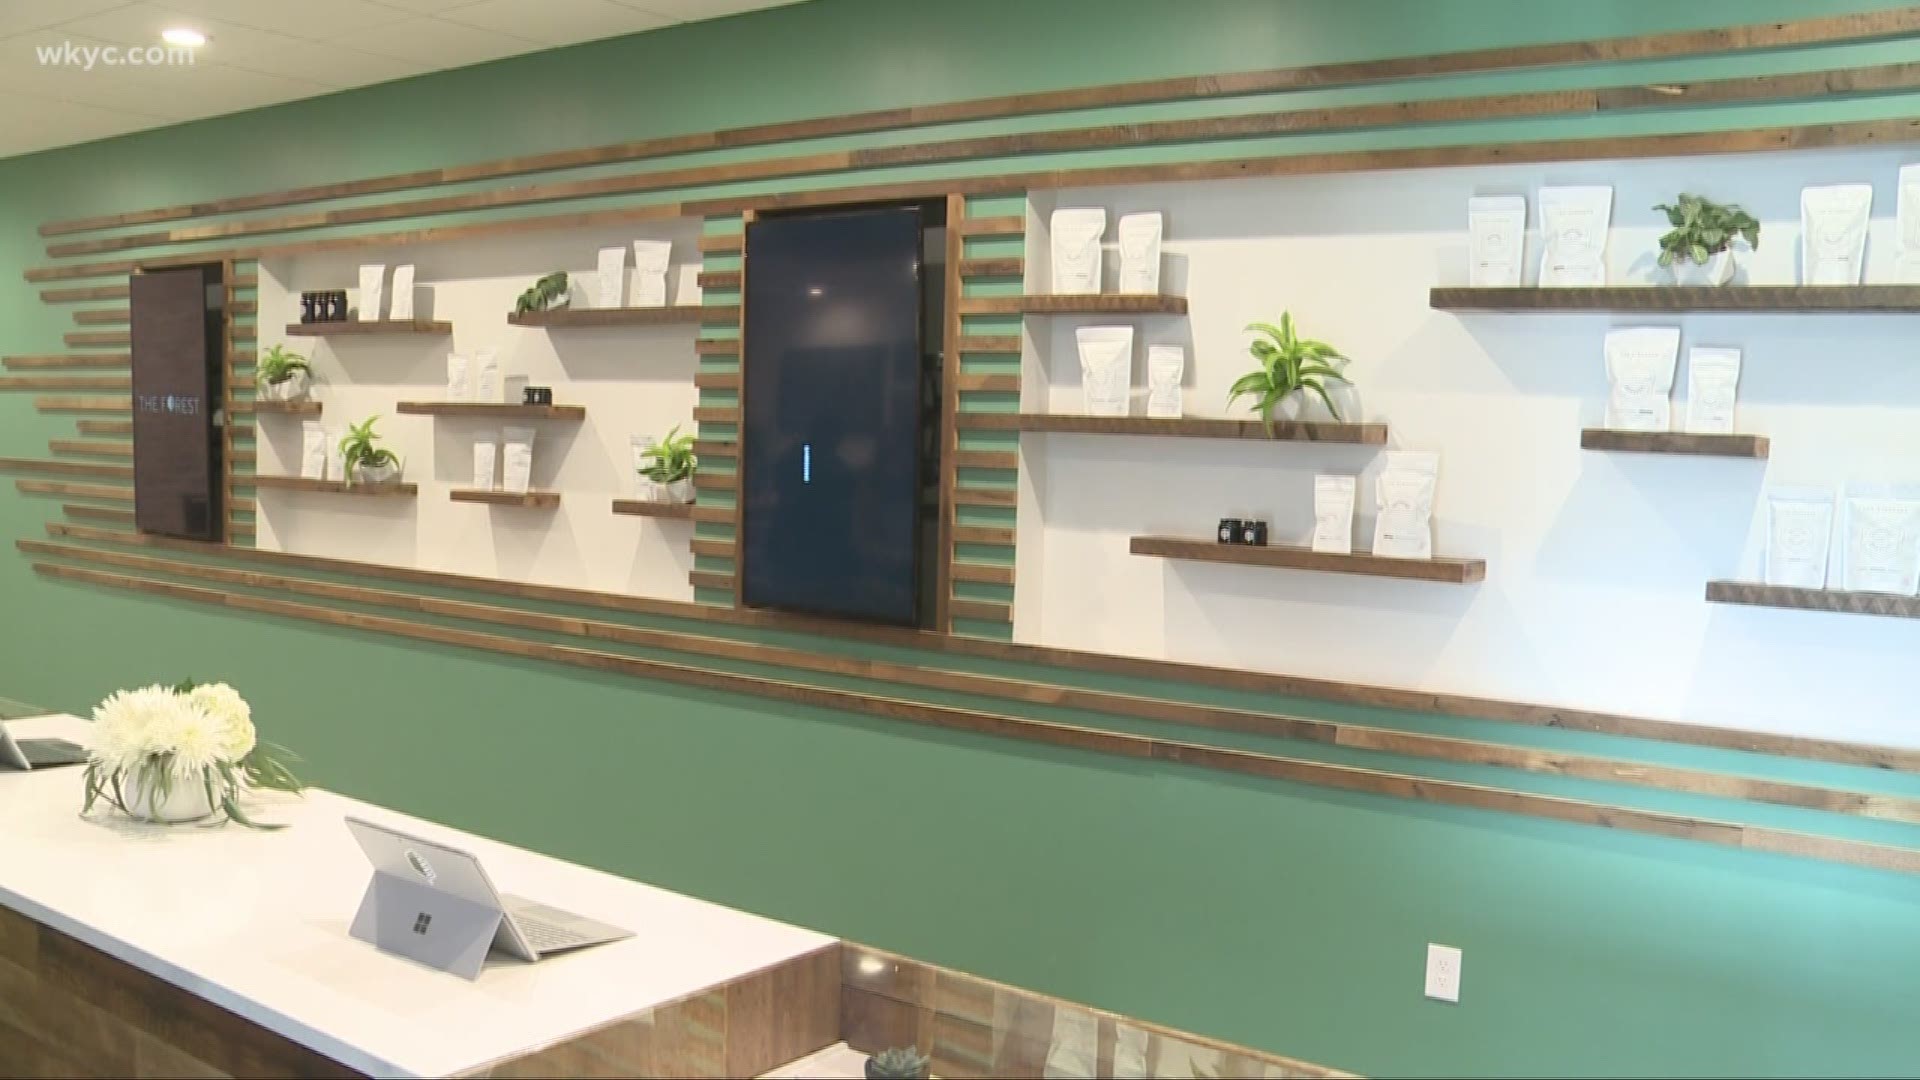 One of Ohio's first medical marijuana dispensaries ready to open in Sandusky